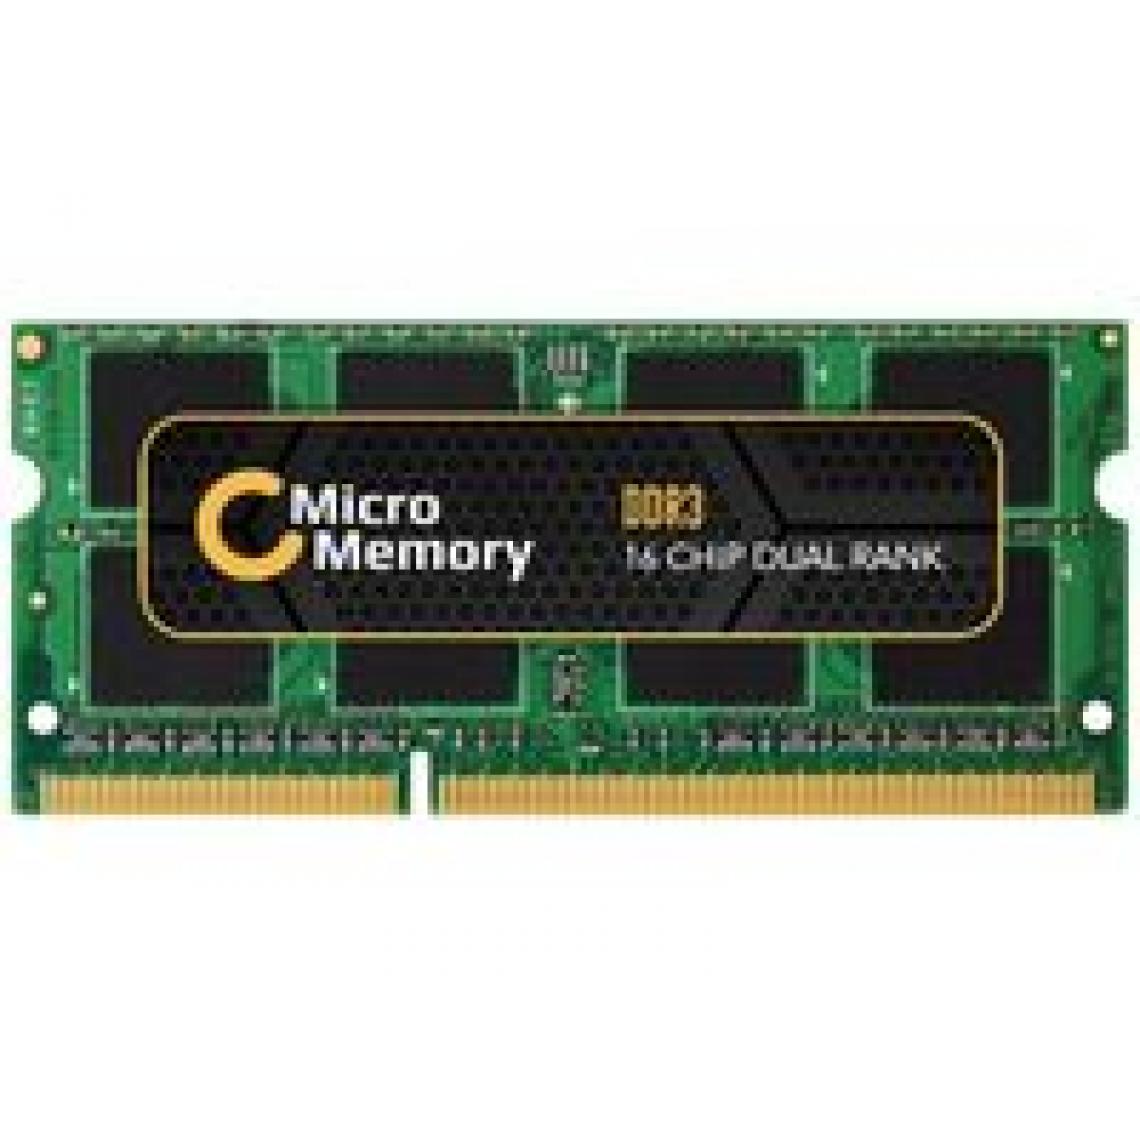 Inconnu - 2GB DDR3 1066MHz PC3-8500 1x2GB memory module - RAM PC Fixe